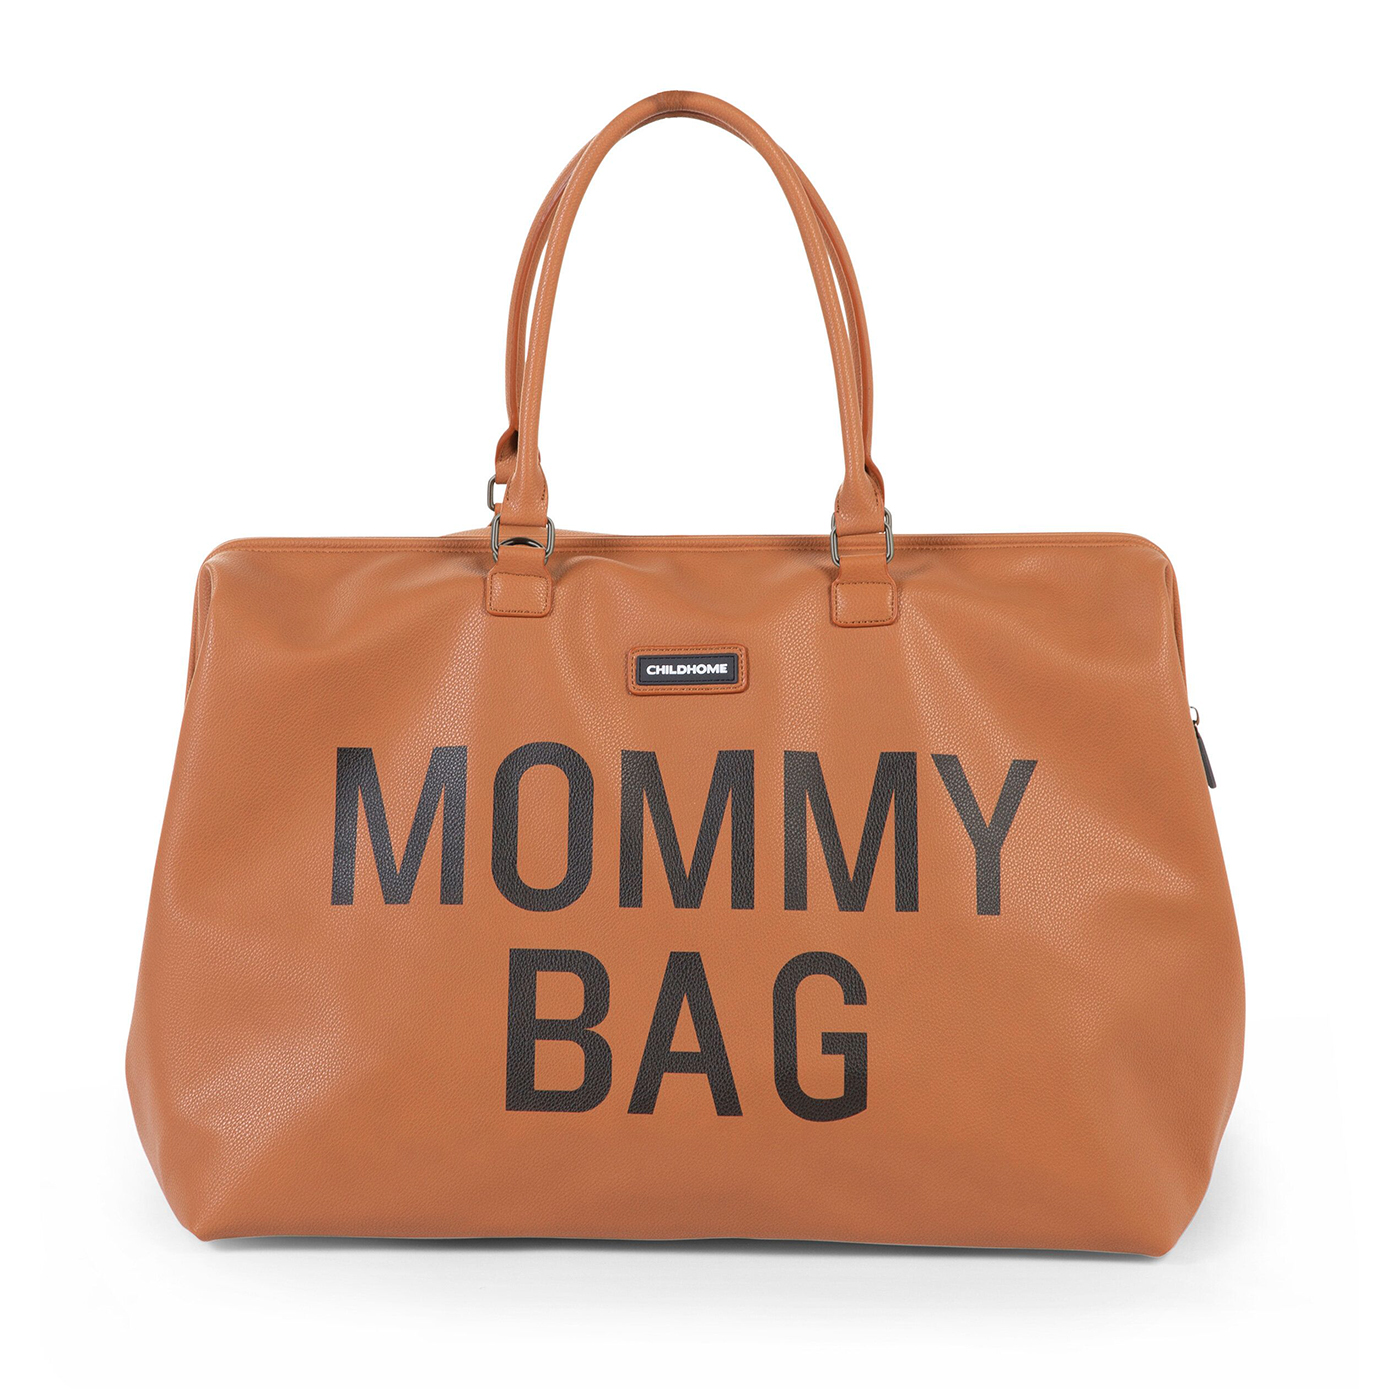  Childhome Mommy Bag Anne Bebek Çantası Suni Deri | Kahve